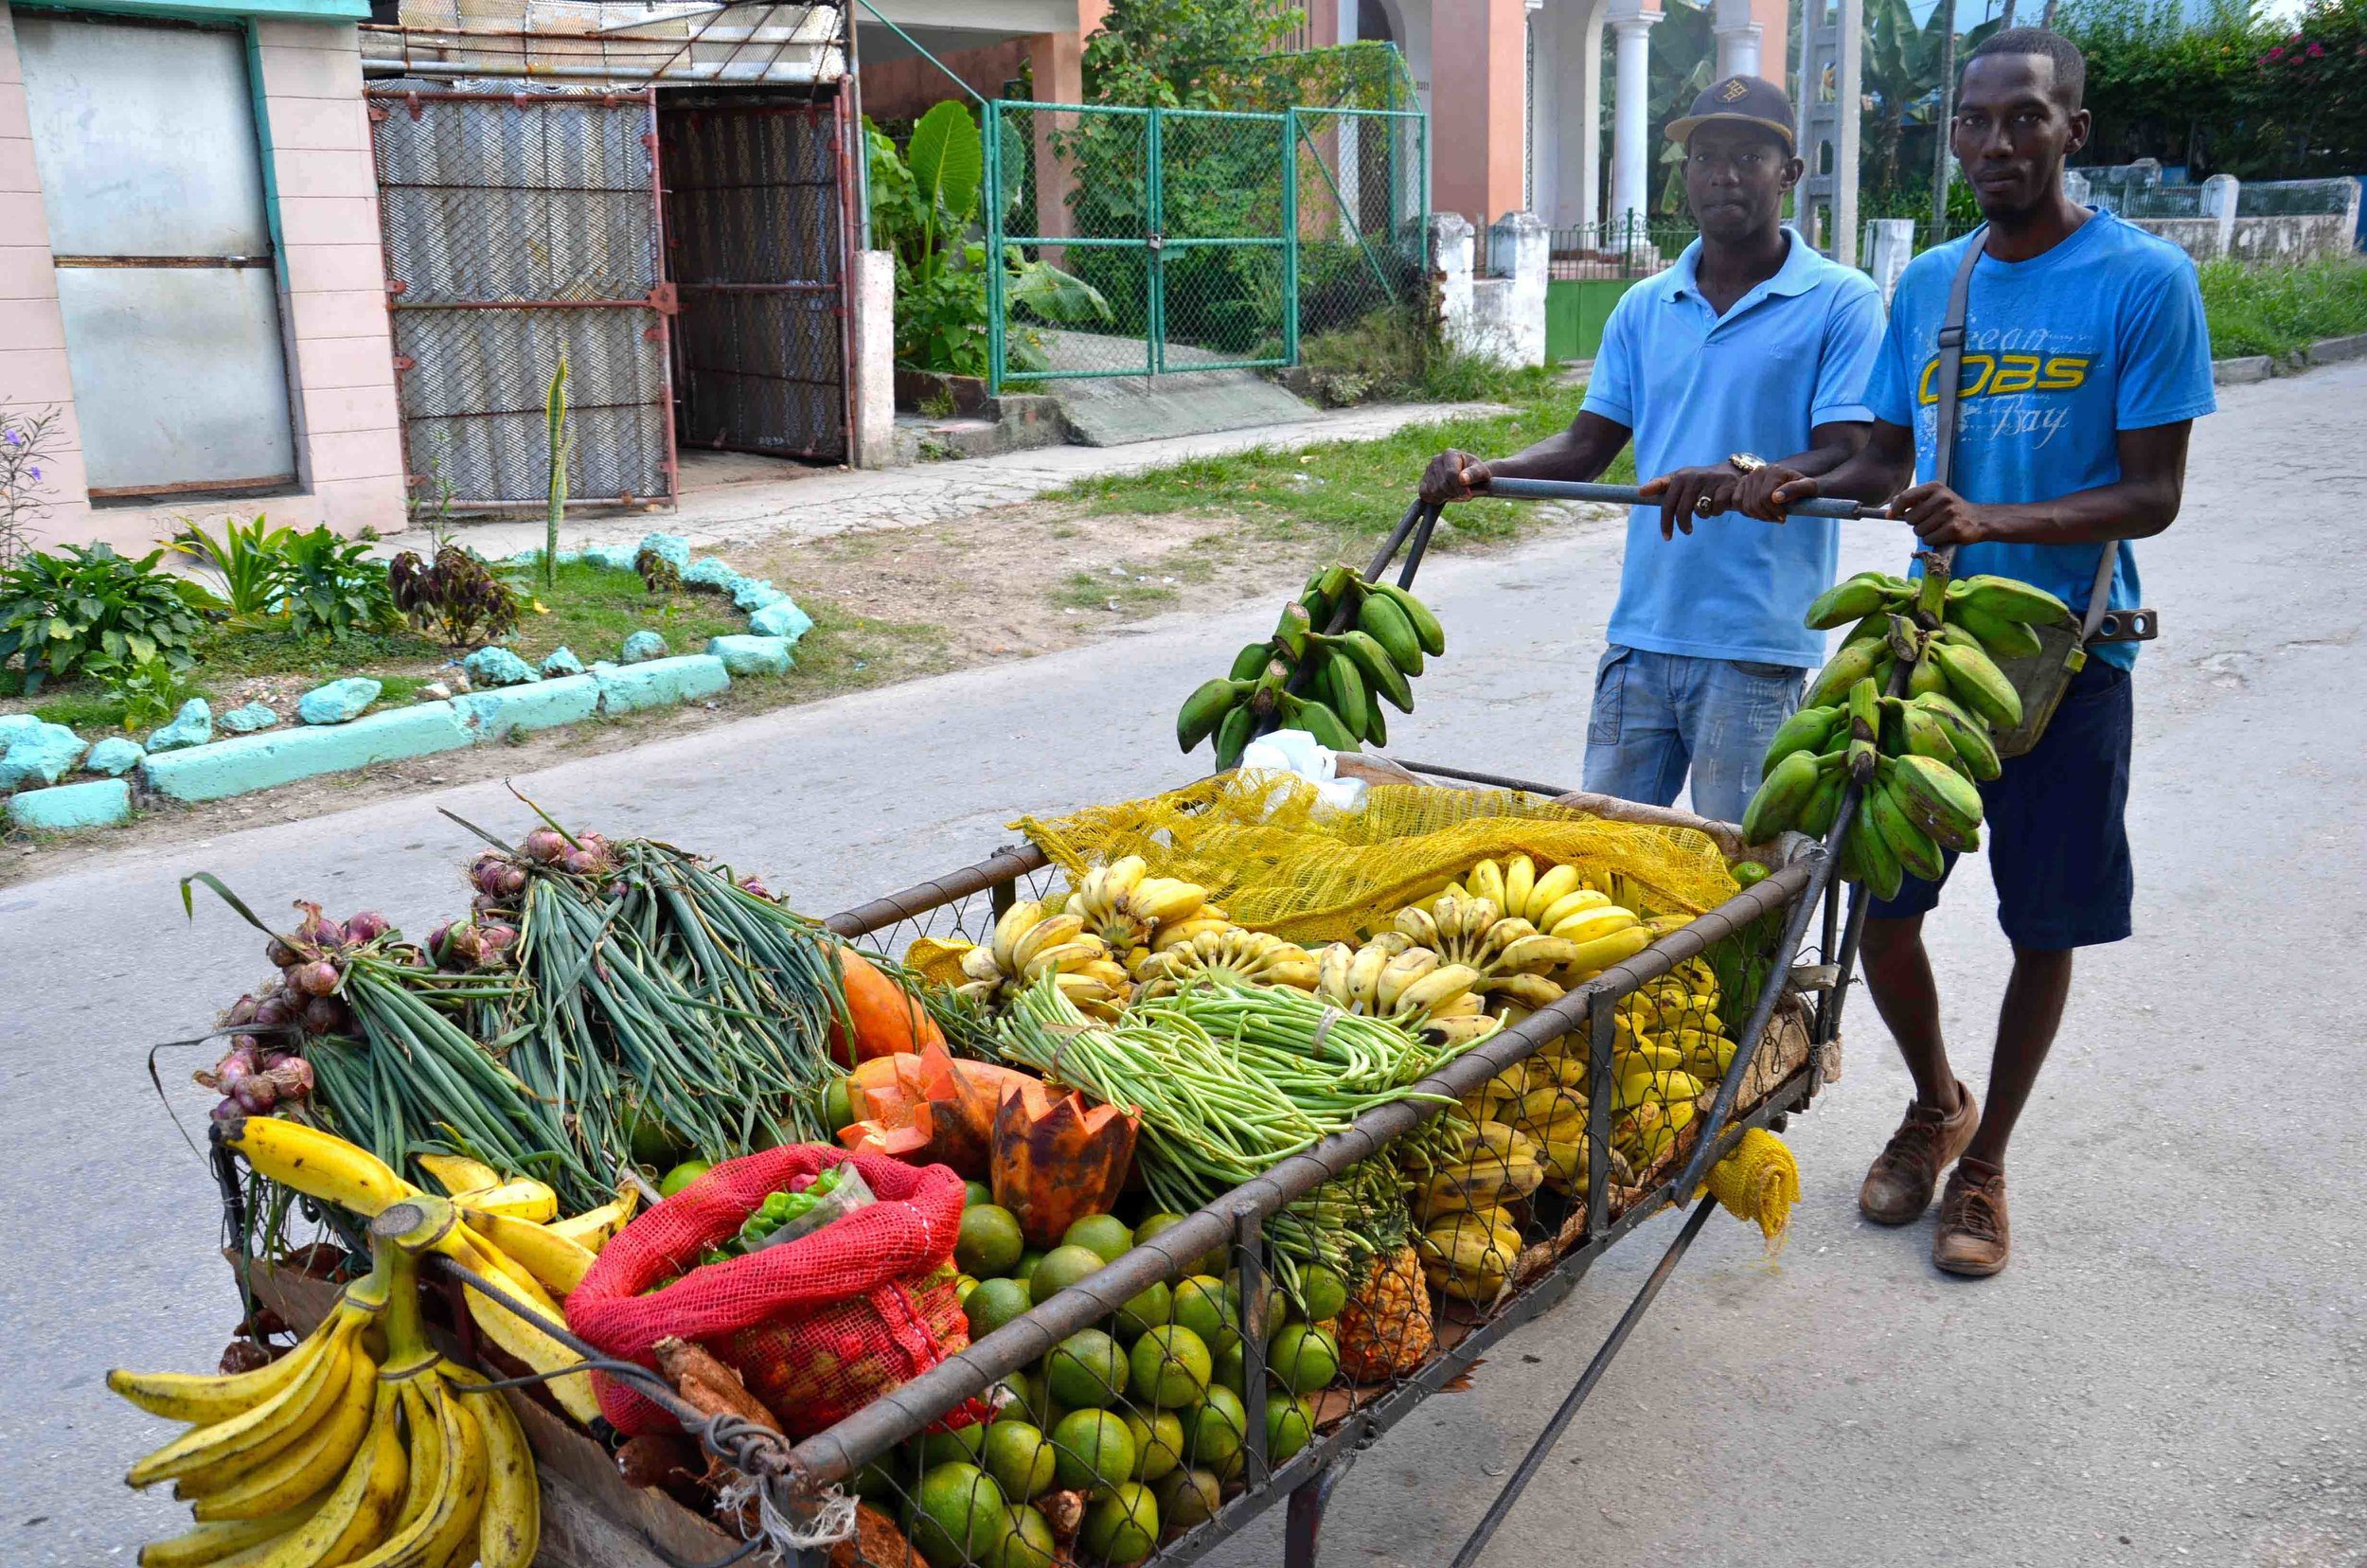 Cuba-U.S. Agroecology Network